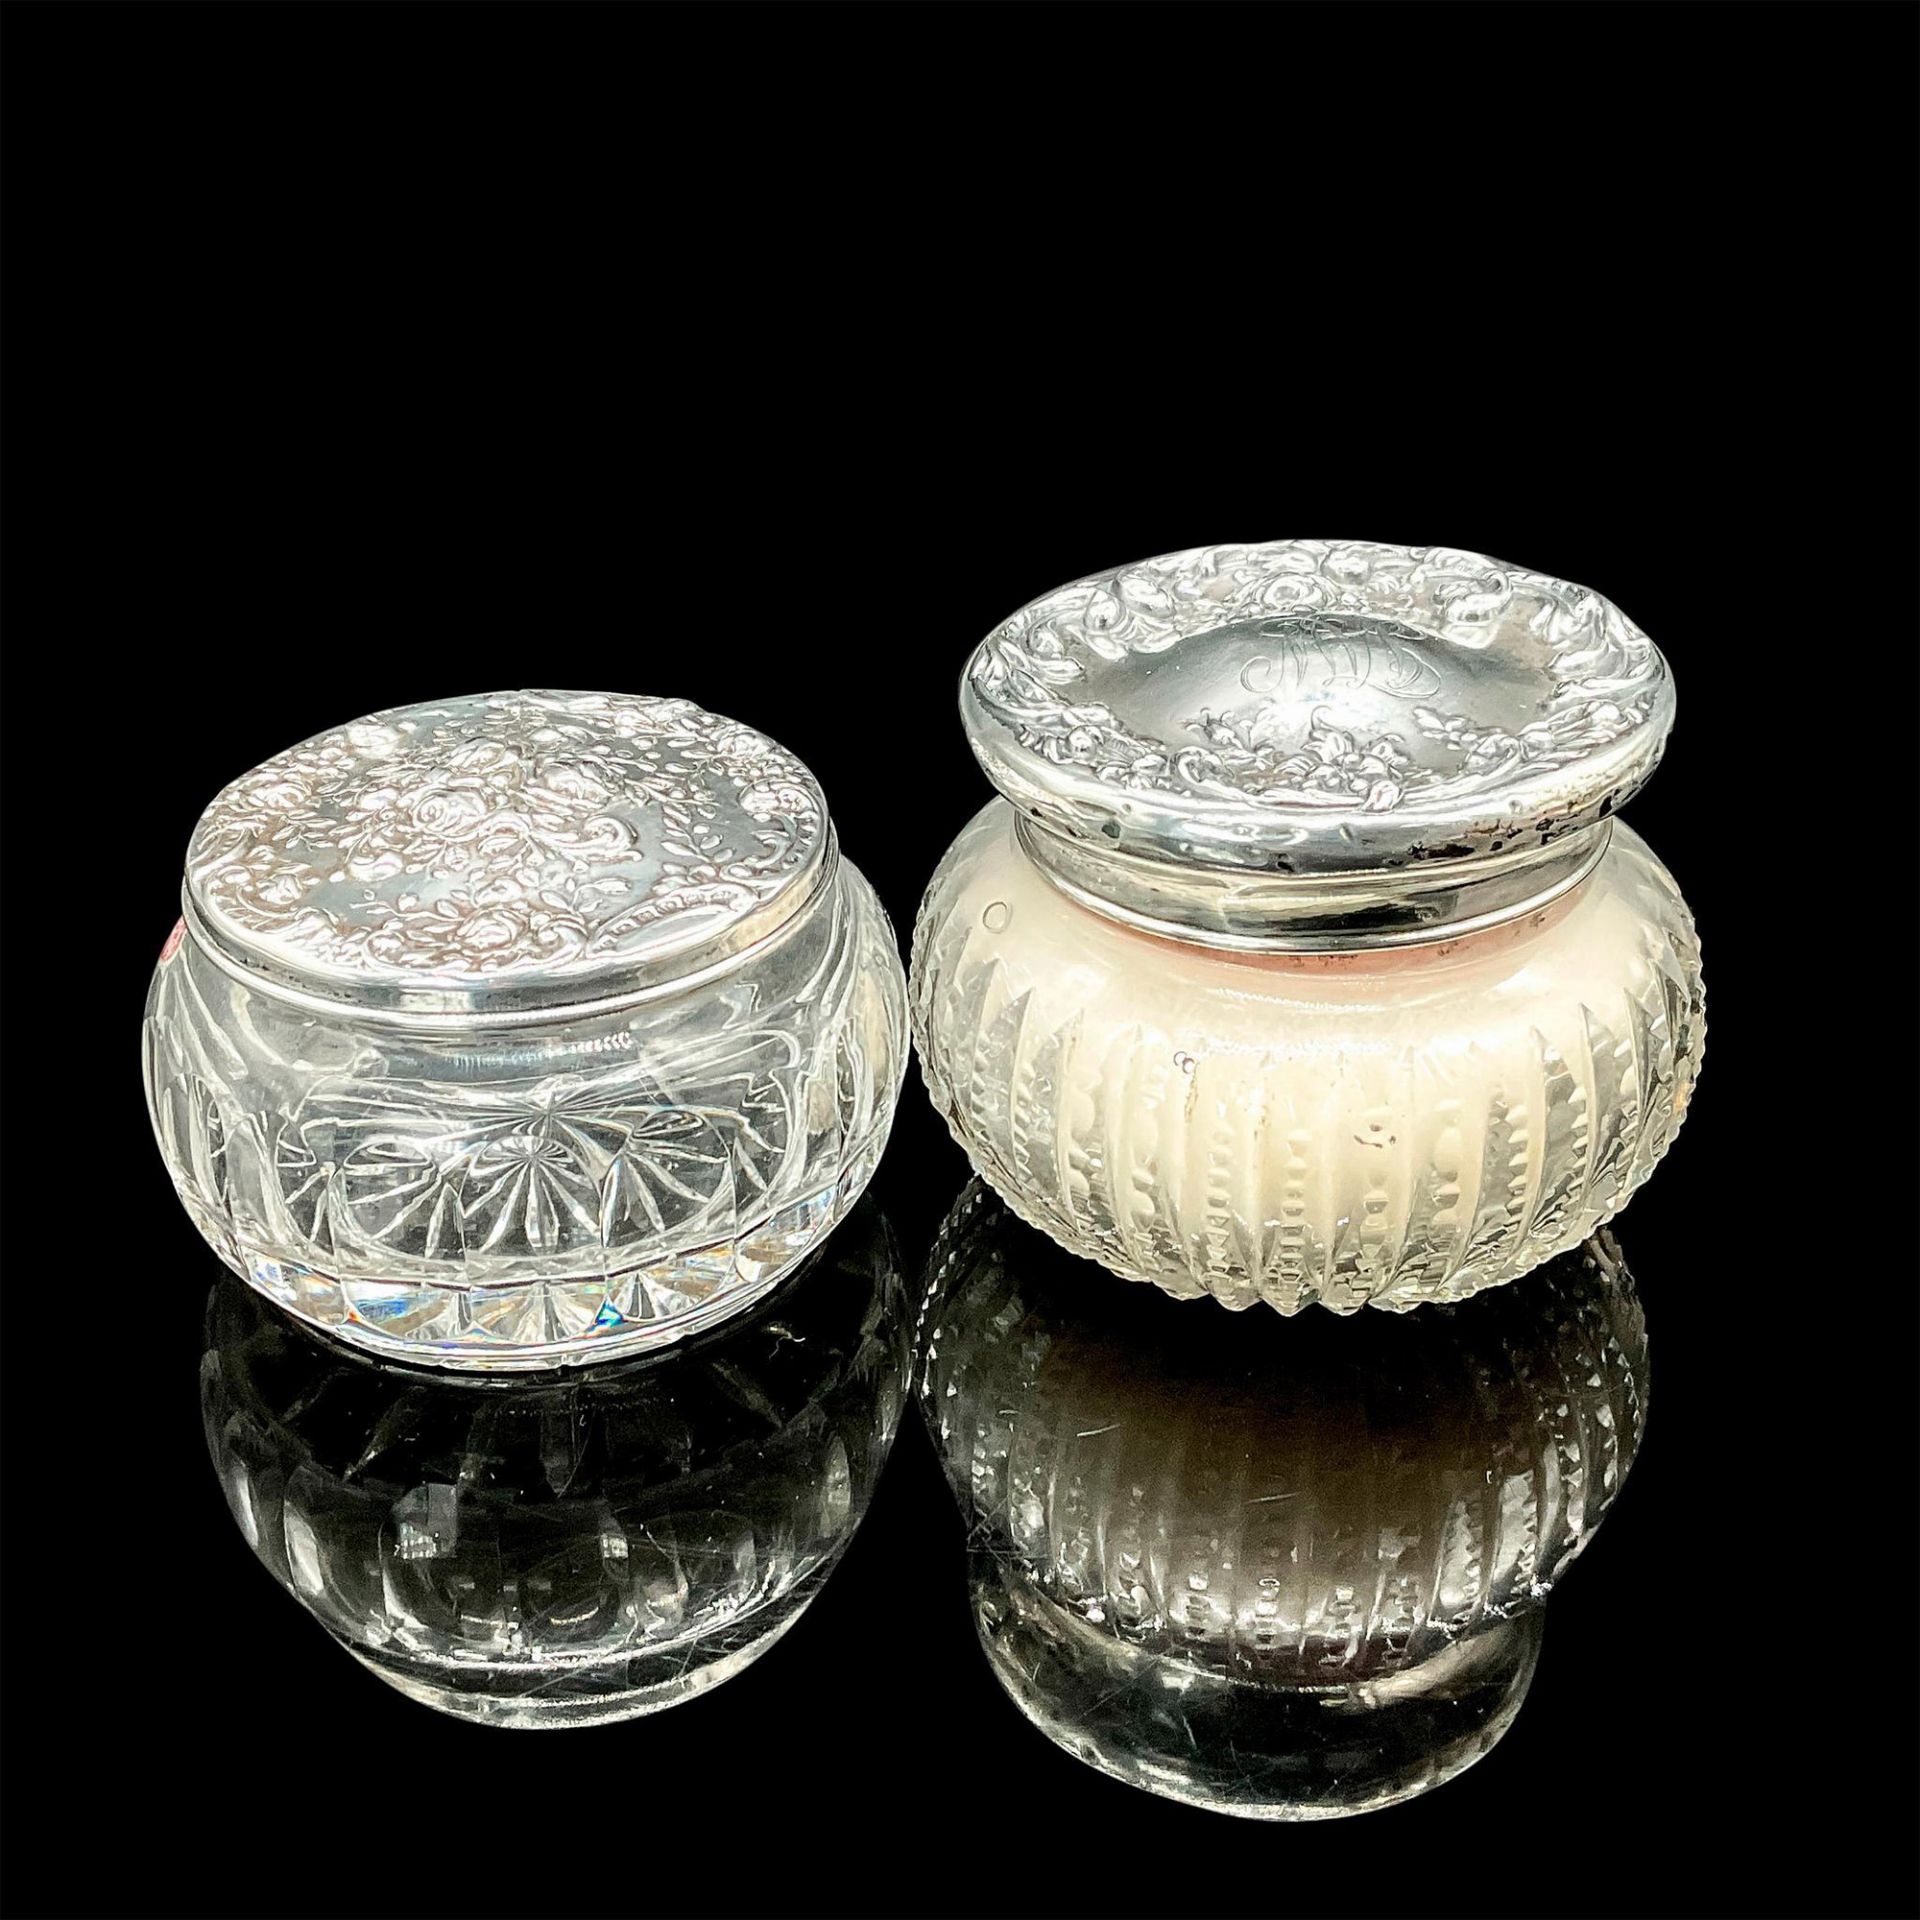 2pc Vintage Crystal and Gorham Silver Powder Jars - Image 2 of 4